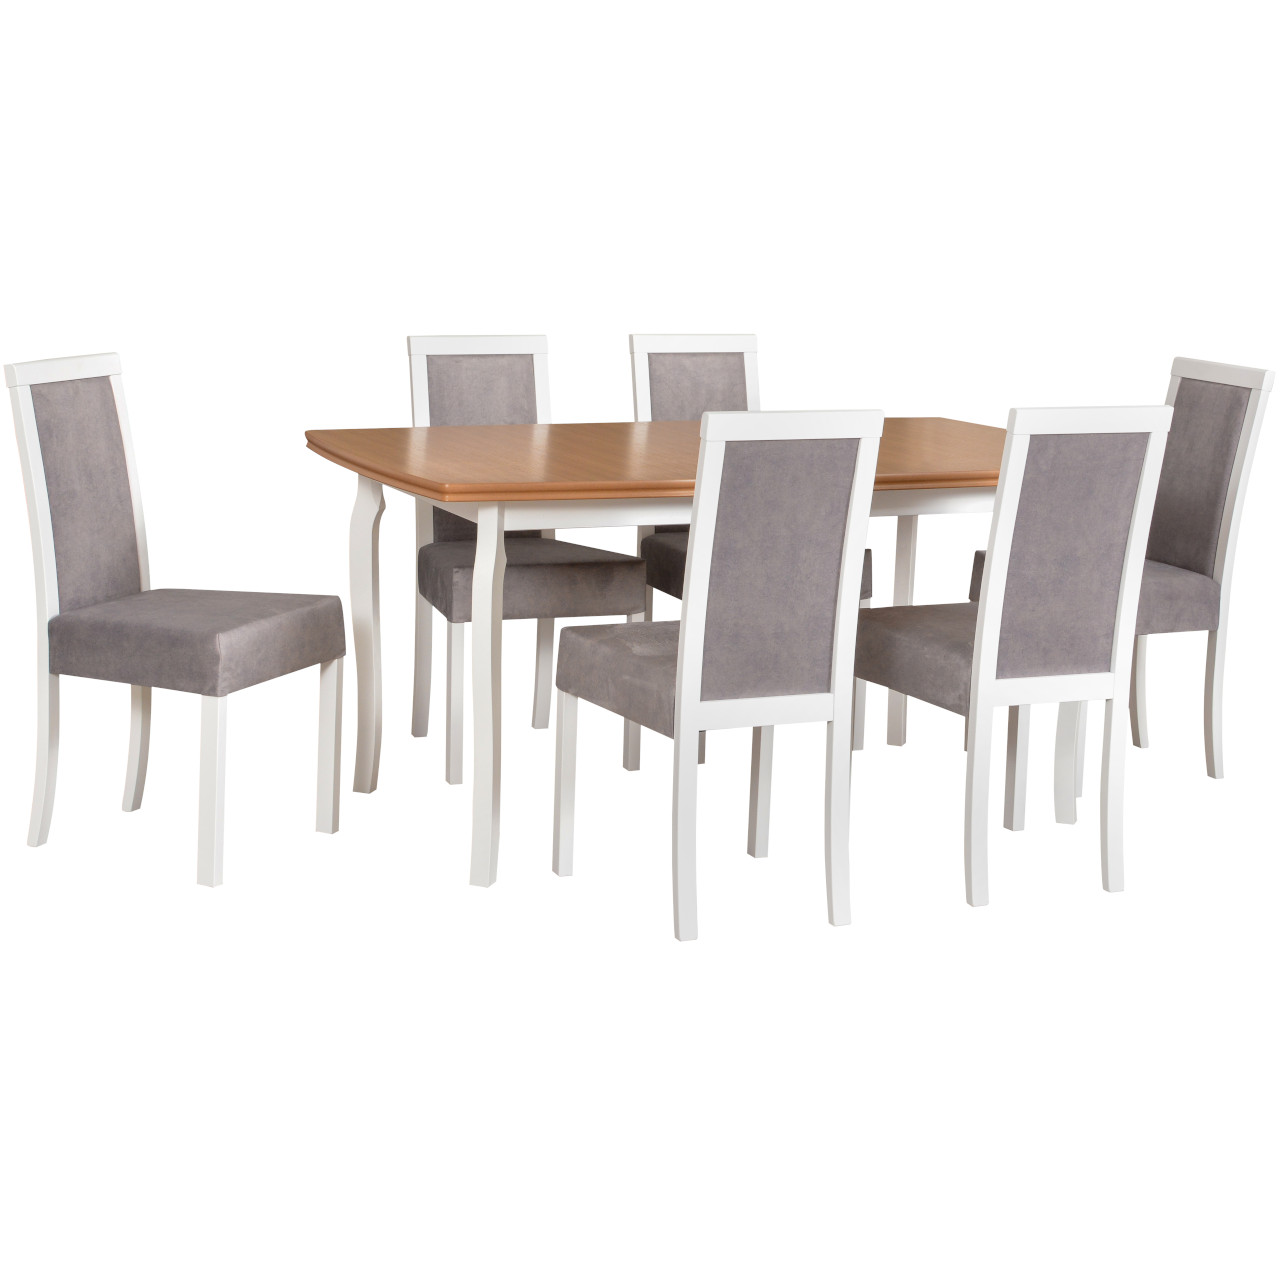 Stůl KENT 1 dubová dýha / bílý + židle ROMA 3 (6 ks) bílá / 20B